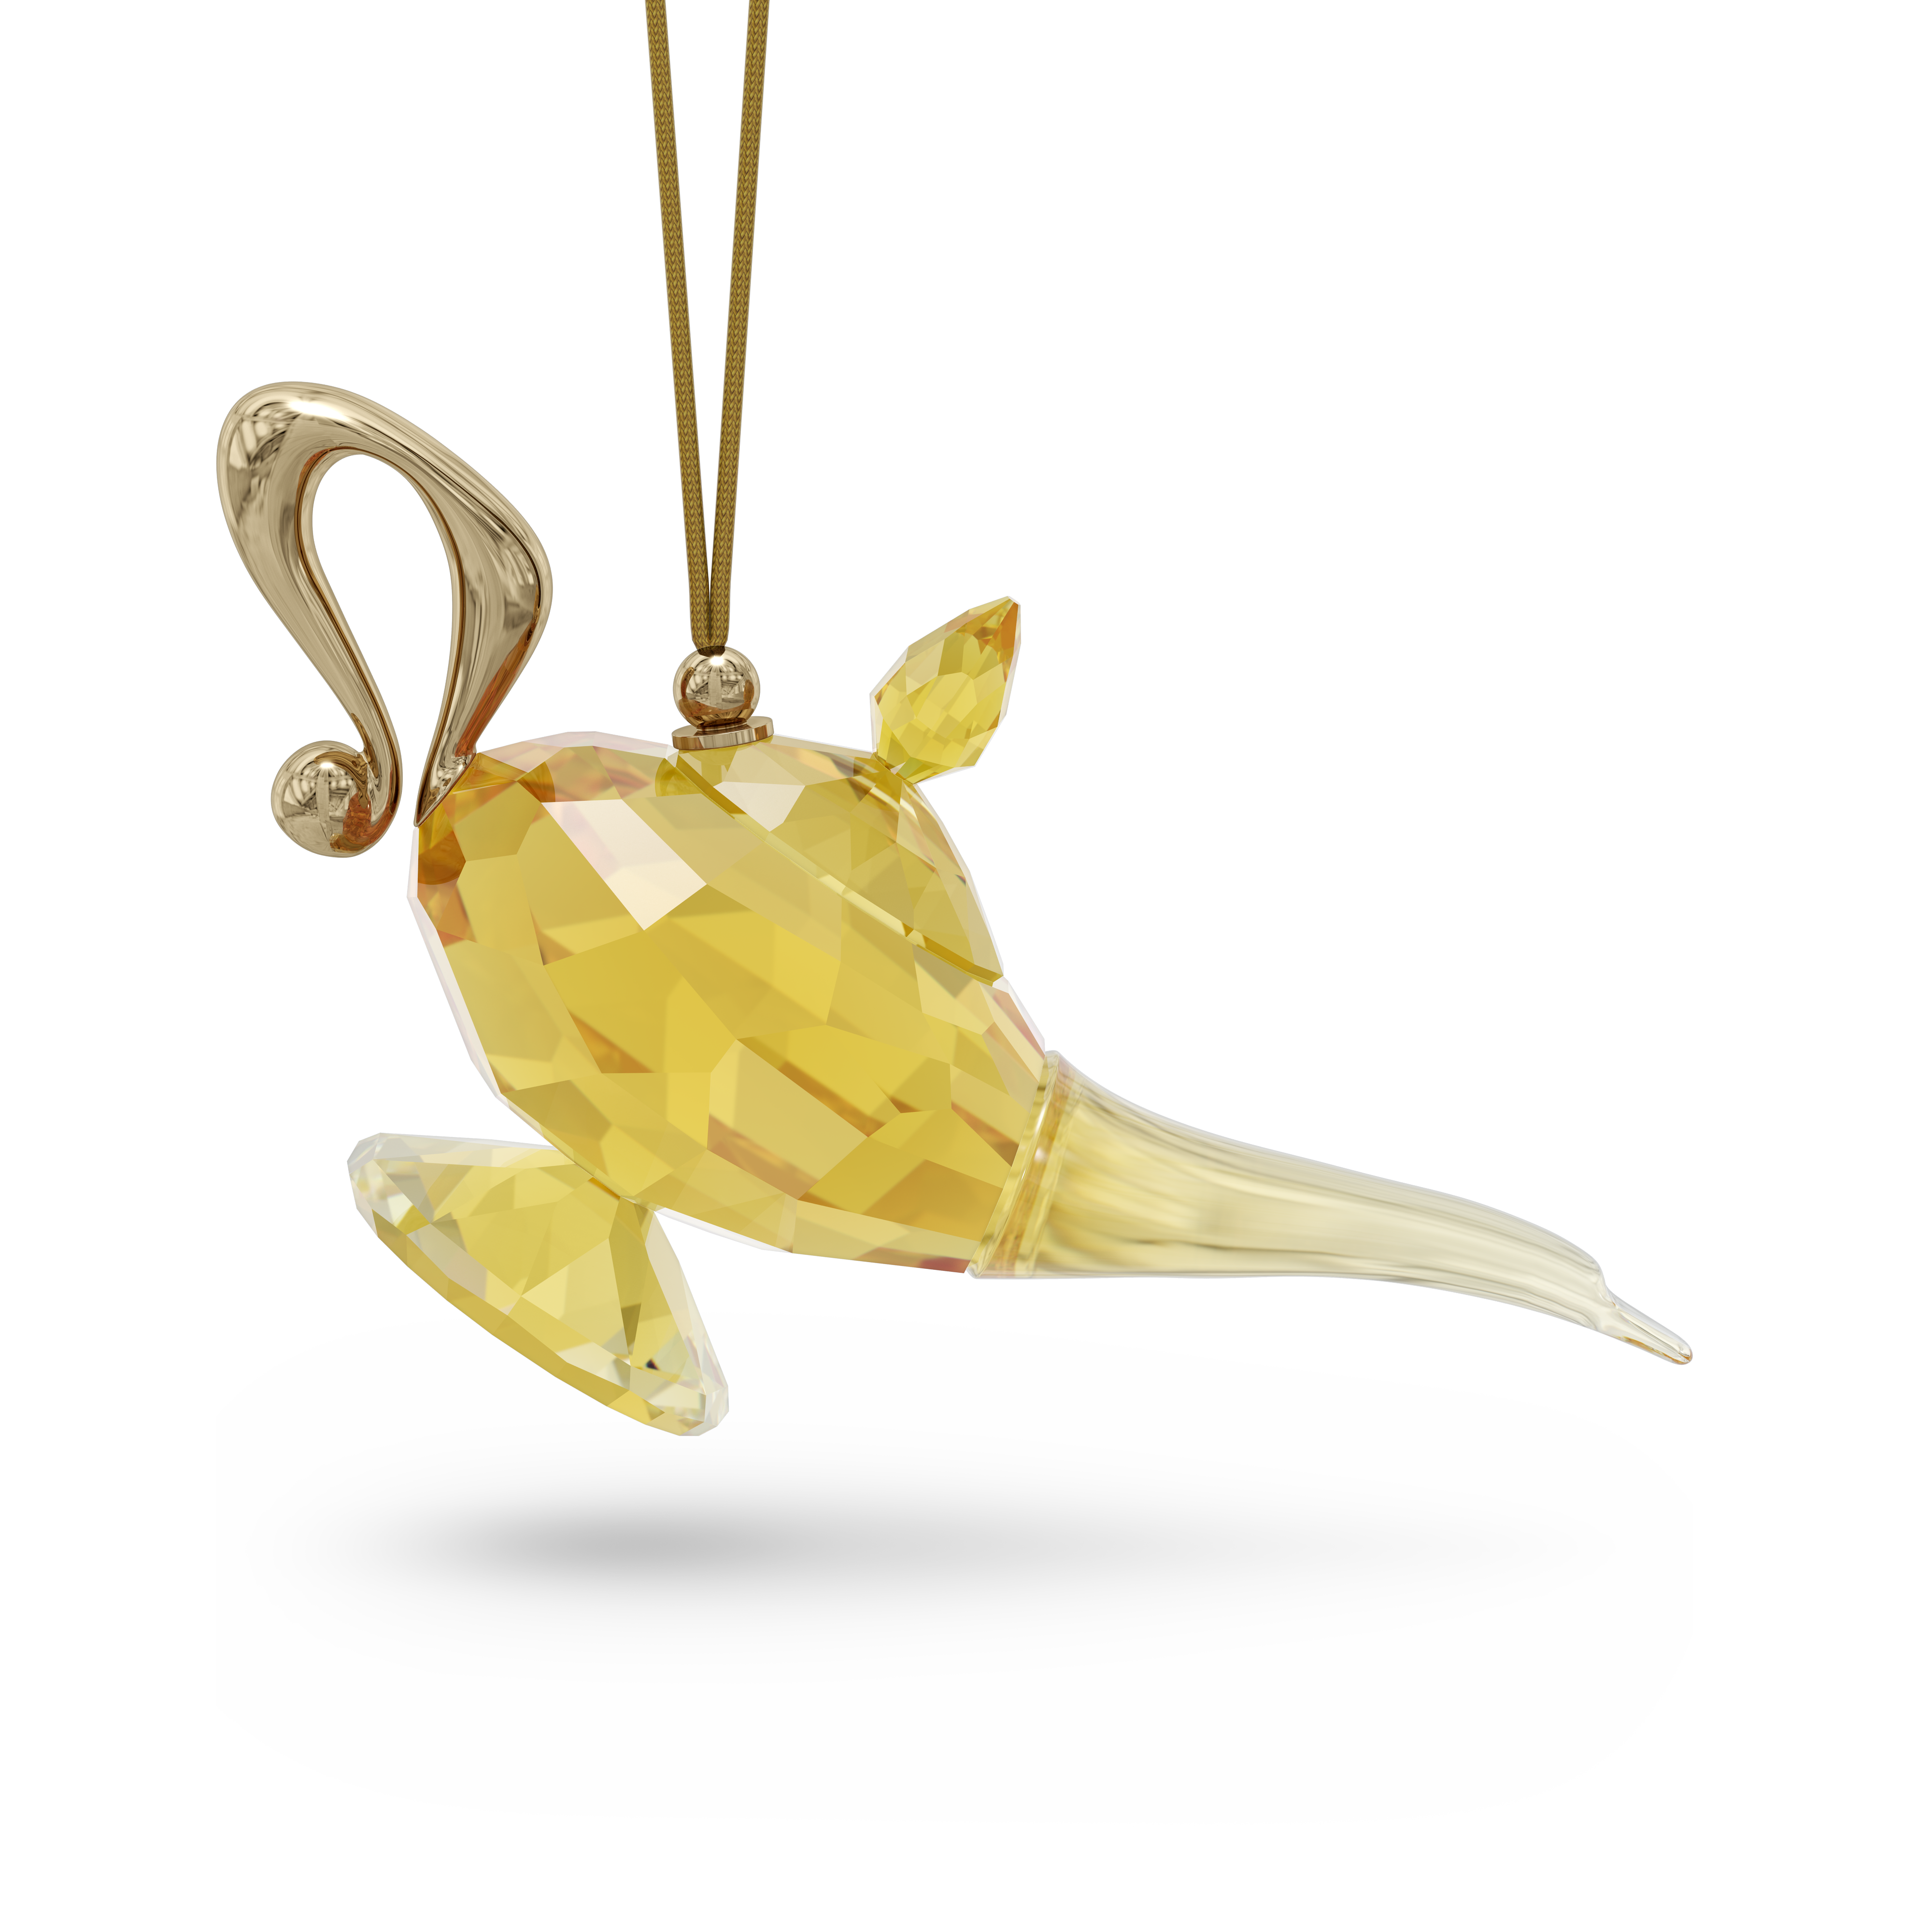 Aladdin Magic Lamp Ornament by SWAROVSKI